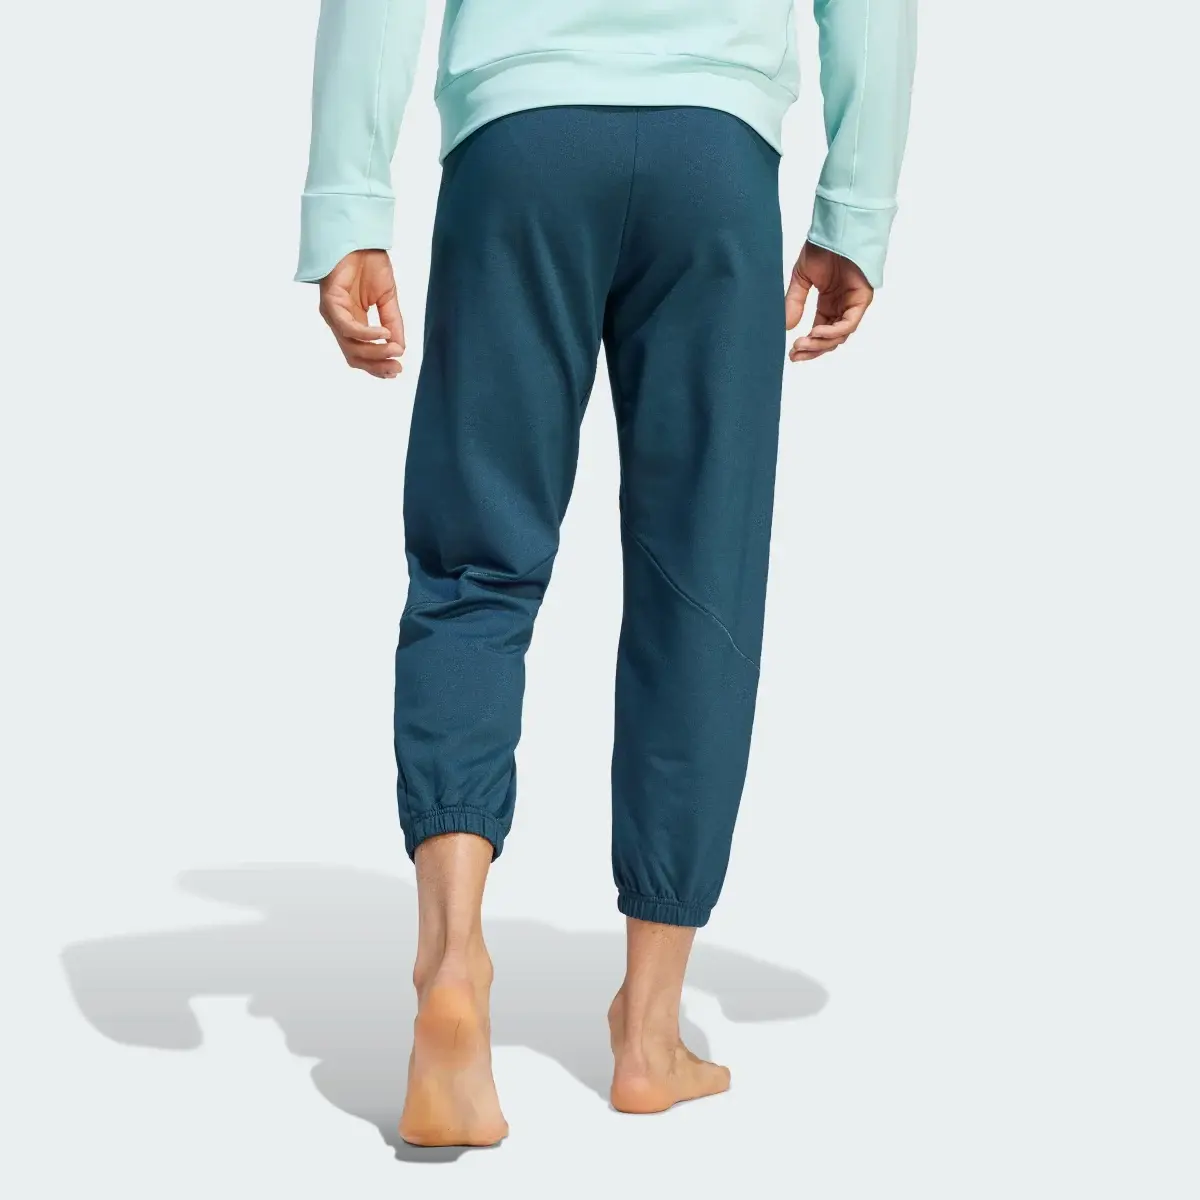 Adidas Pants de Yoga Designed for Training 7/8. 2